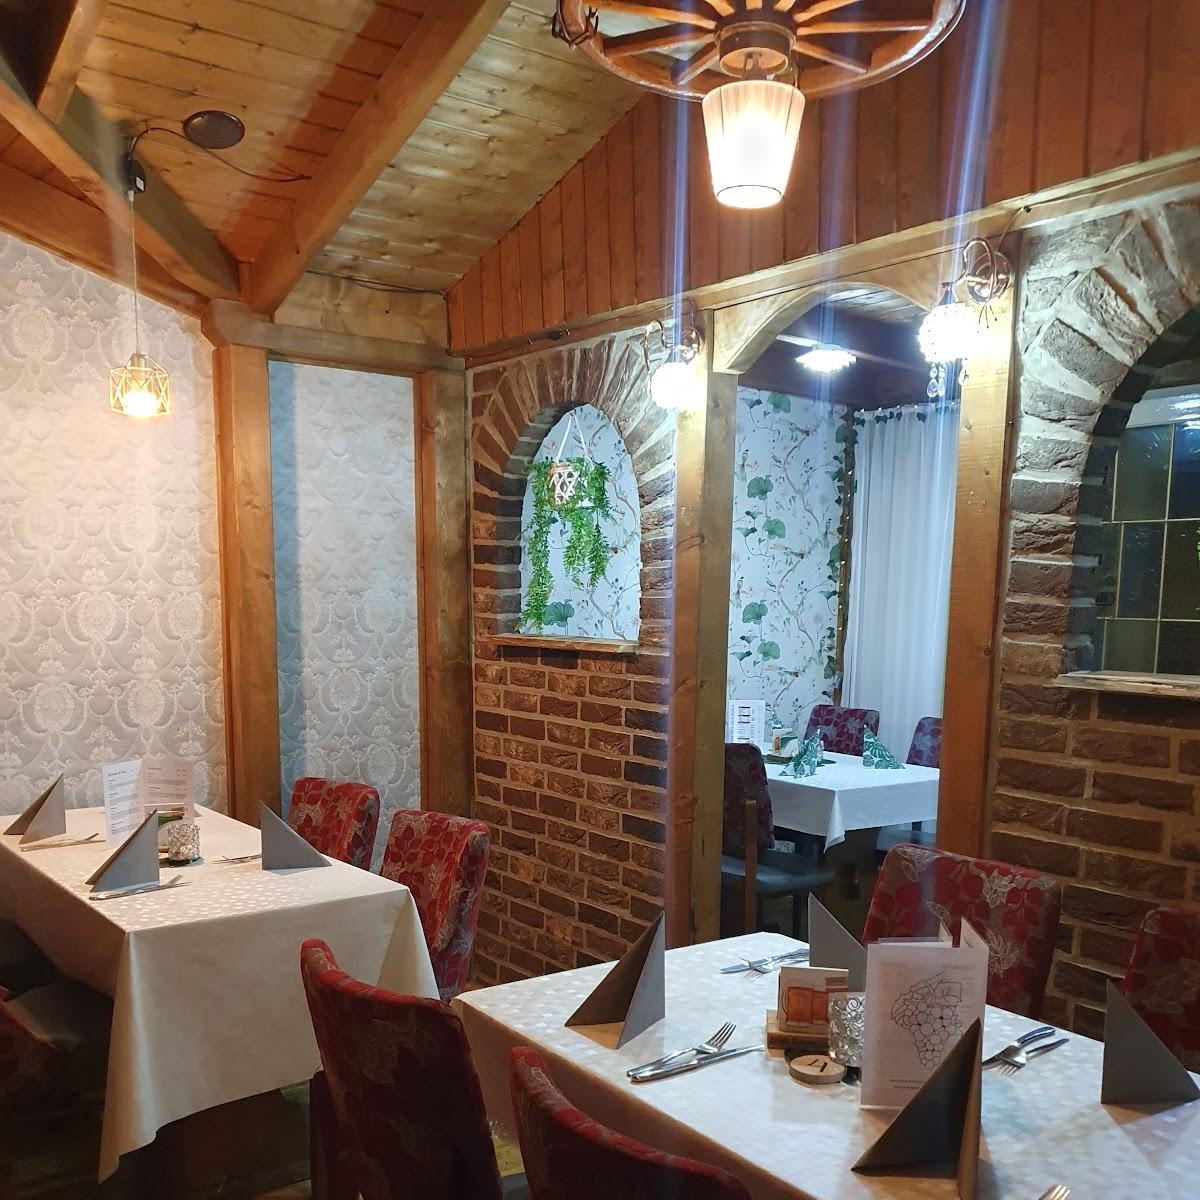 Restaurant "Paradise" in Ankum